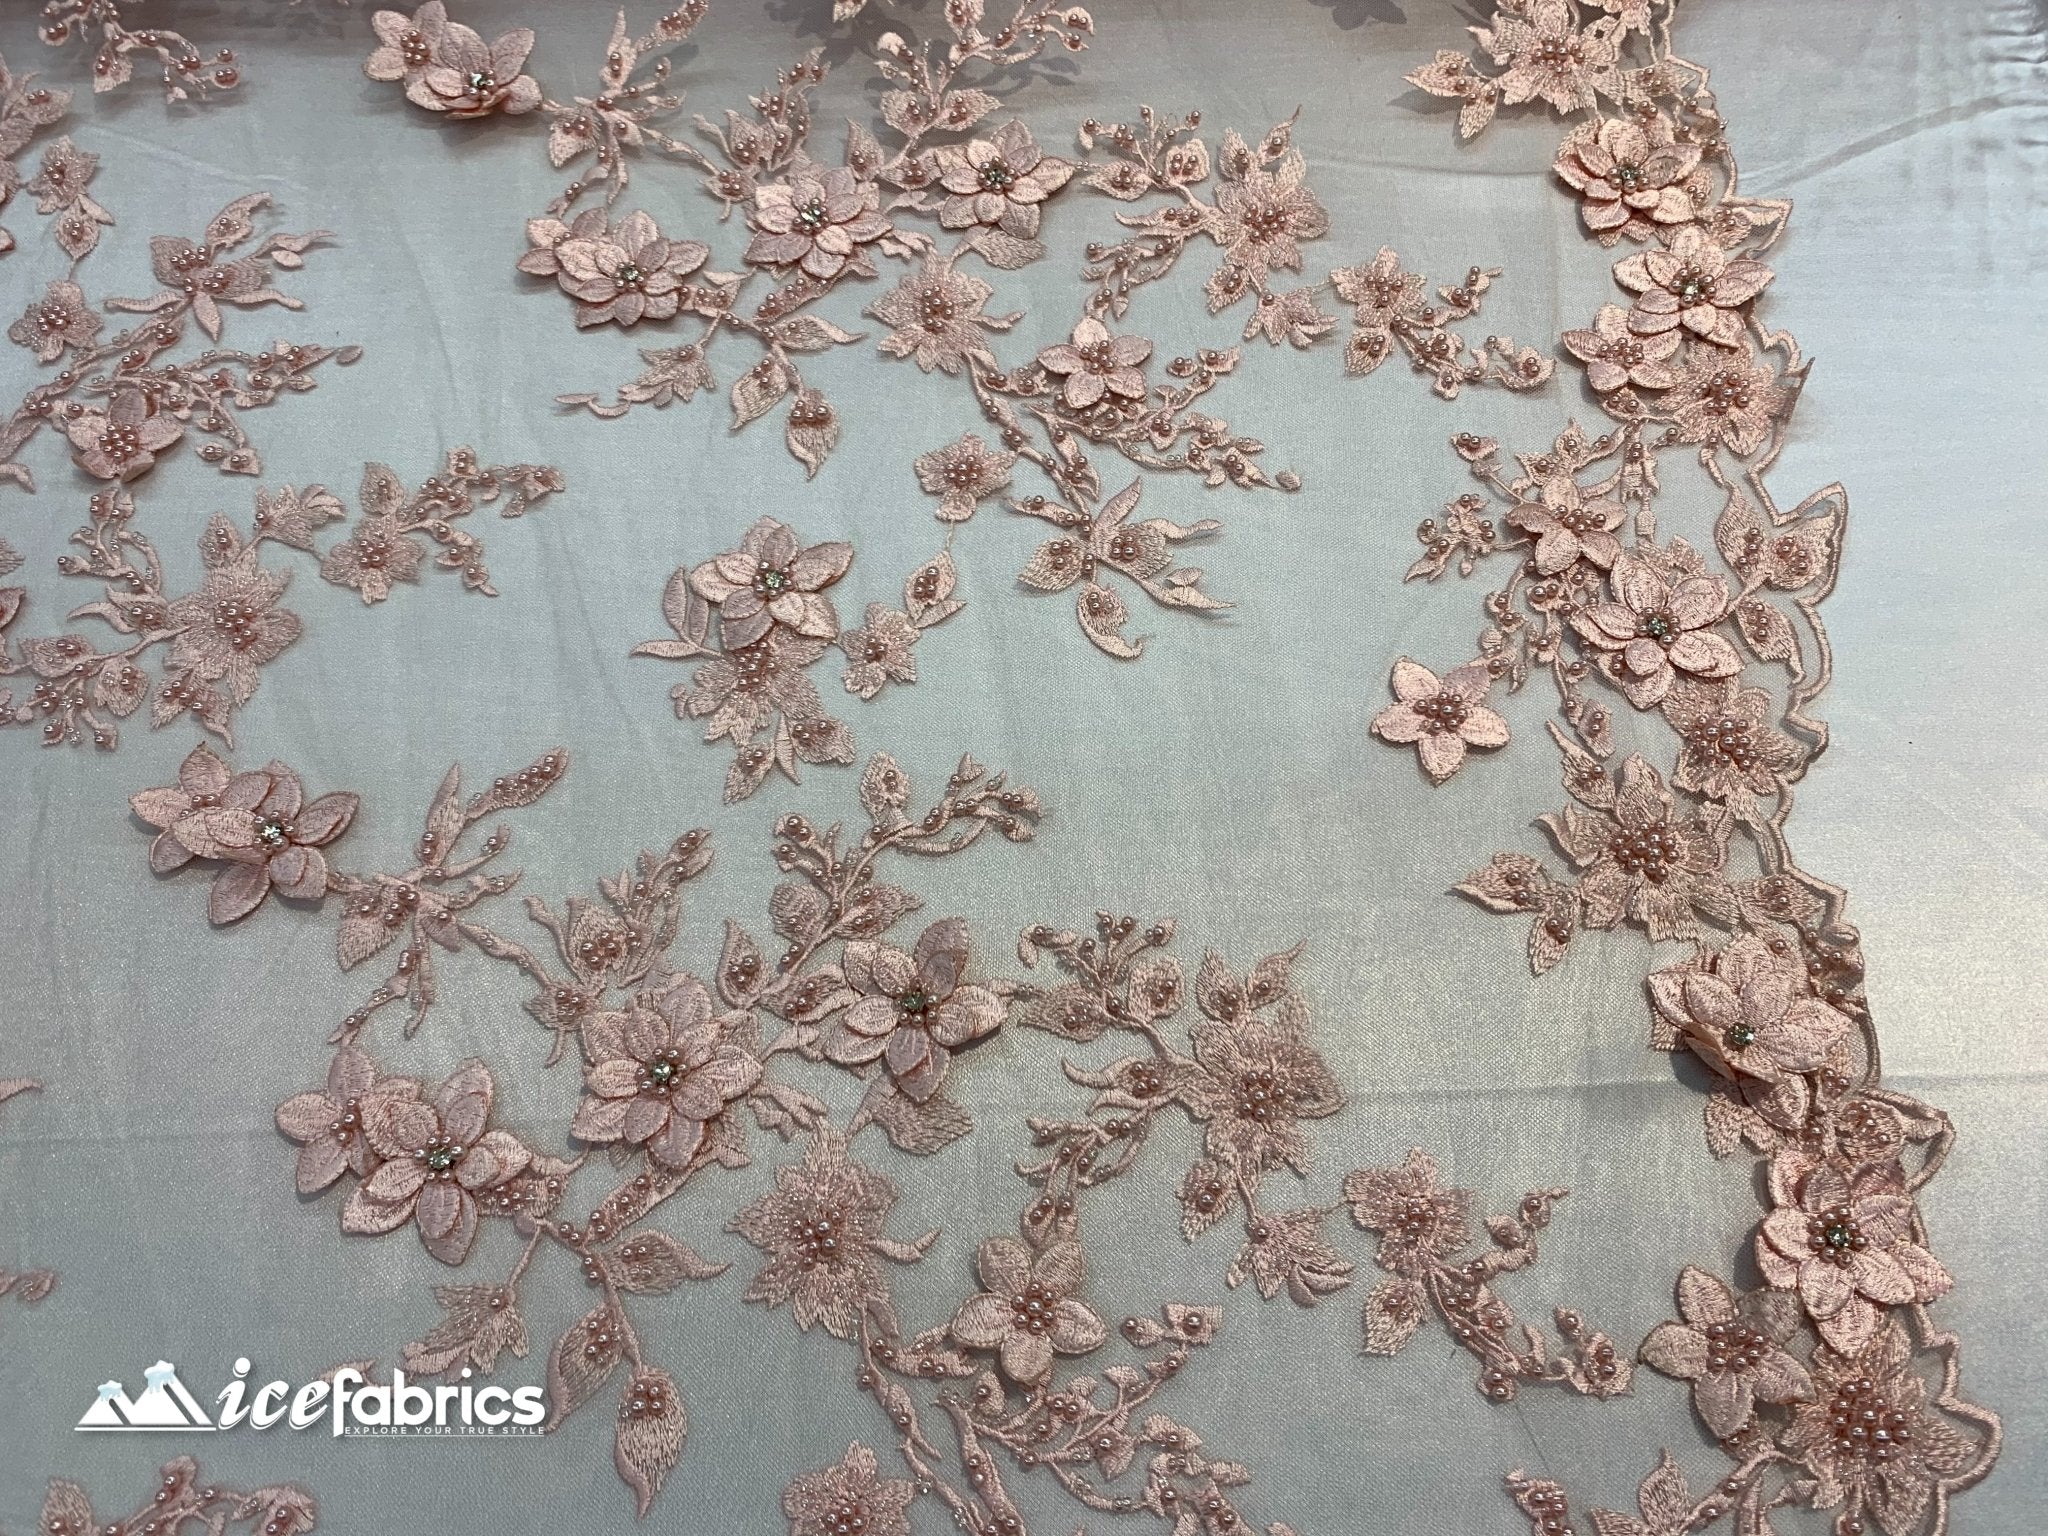 Embroidered Fabric/ 3D Flowers Beaded Fabric/ Lace Fabric/ PinkICE FABRICSICE FABRICSPinkEmbroidered Fabric/ 3D Flowers Beaded Fabric/ Lace Fabric/ Pink ICE FABRICS